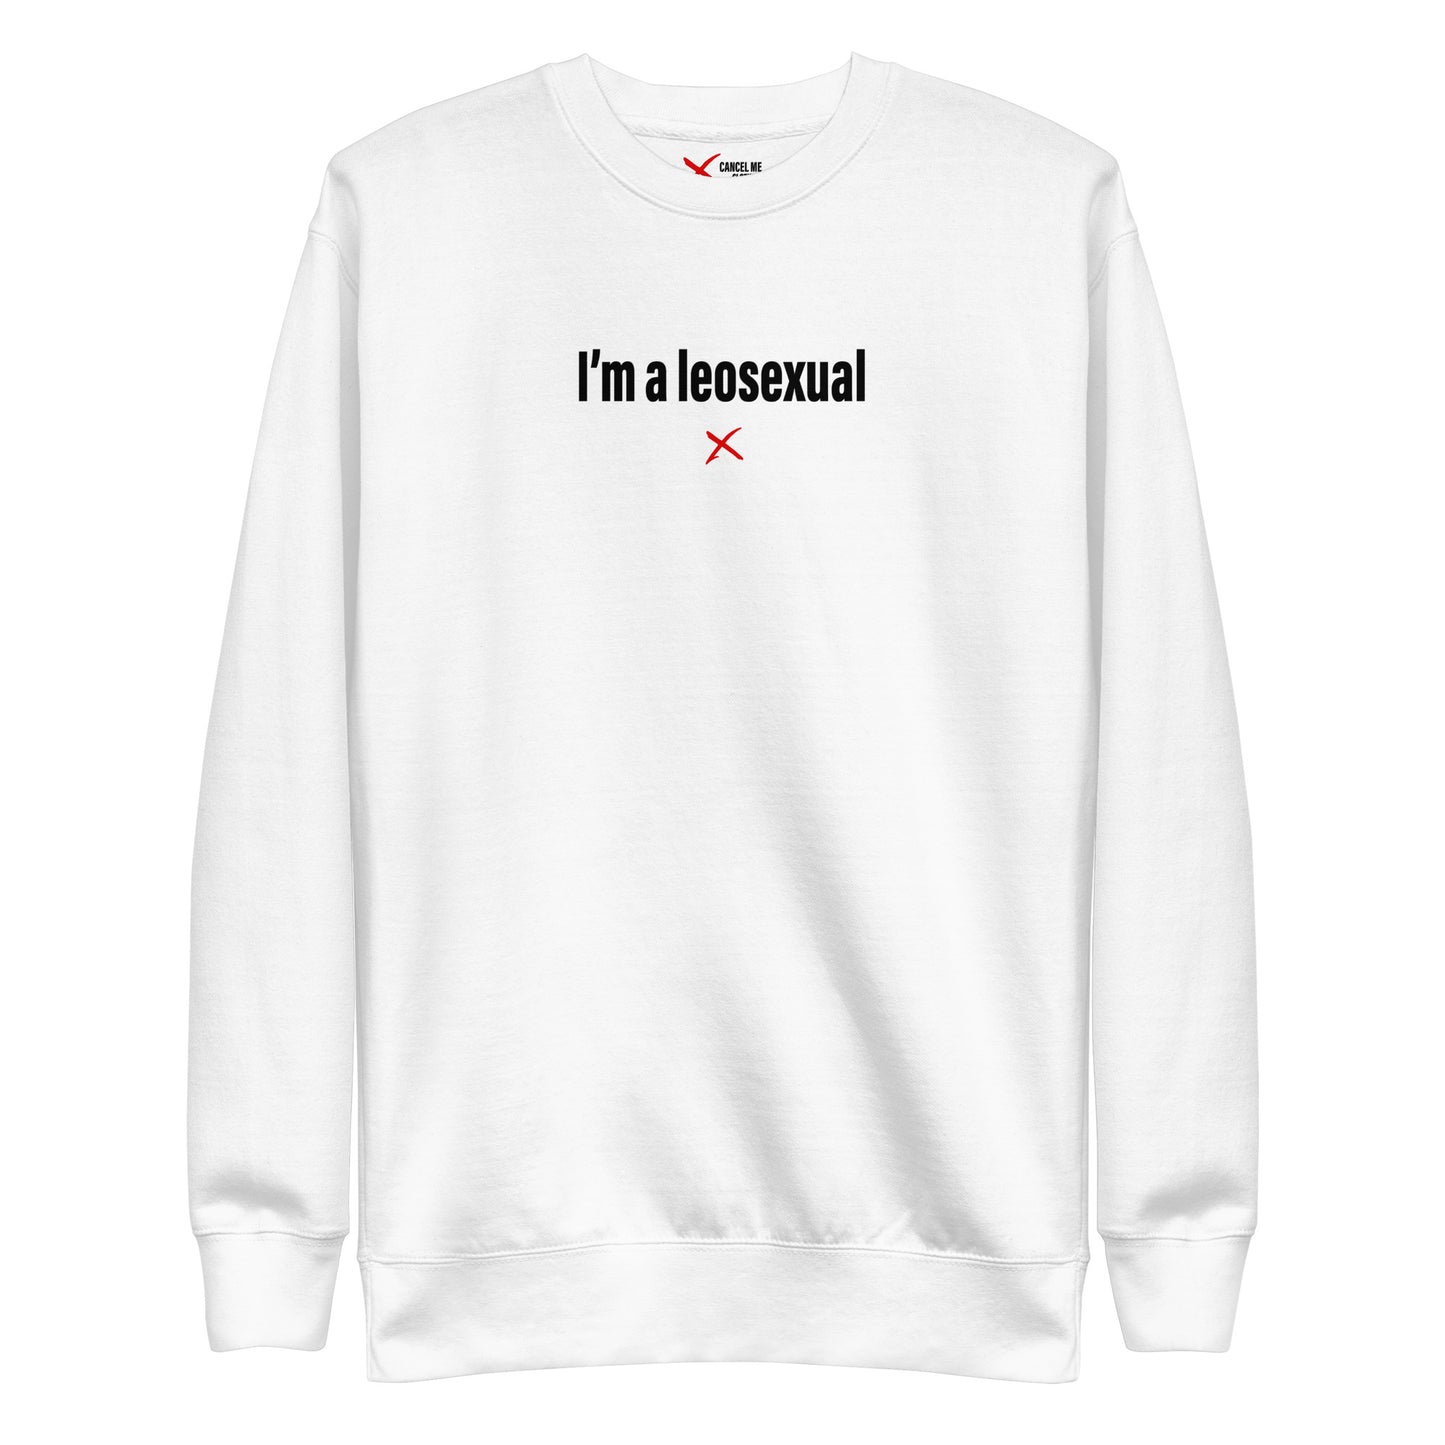 I'm a leosexual - Sweatshirt